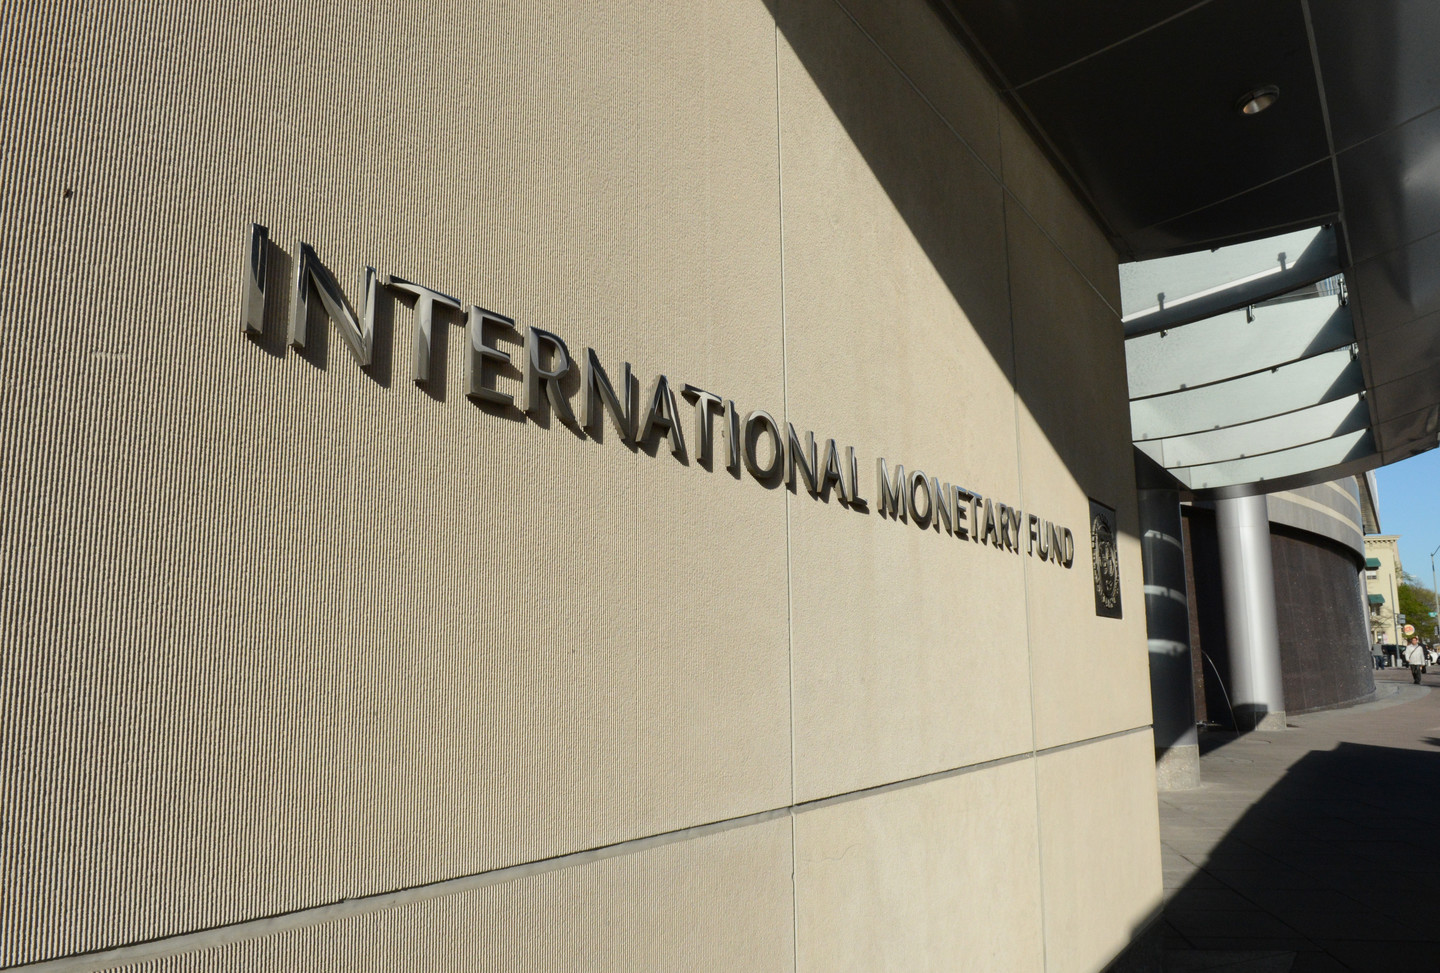 <p><span>Табличка с логотипом Международного валютного фонда на стене здания МВФ. Фото: &copy; РИА Новости/Наталья Селиверстова</span></p>